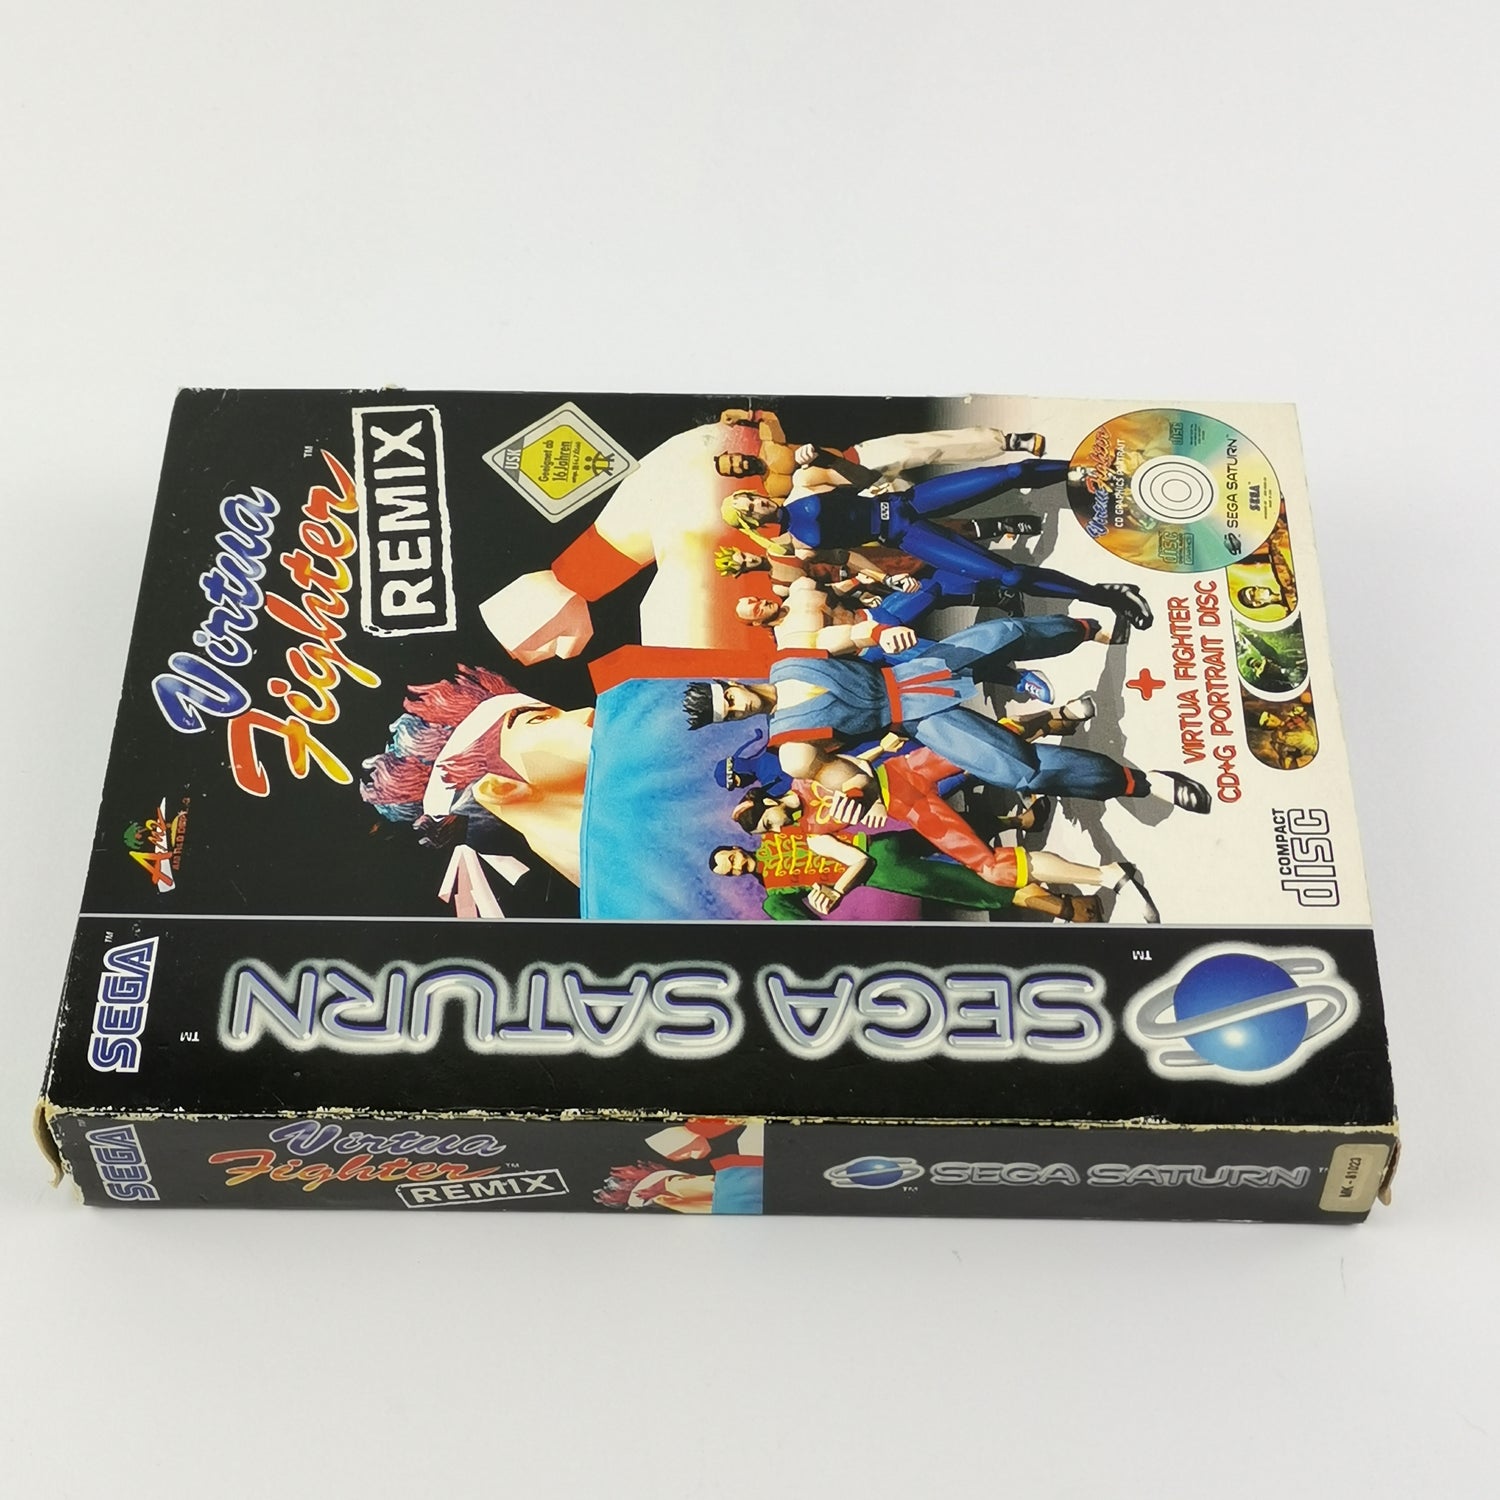 Sega Saturn Game: Virtua Fighter Remix - OVP cardboard slipcase & instructions PAL CD